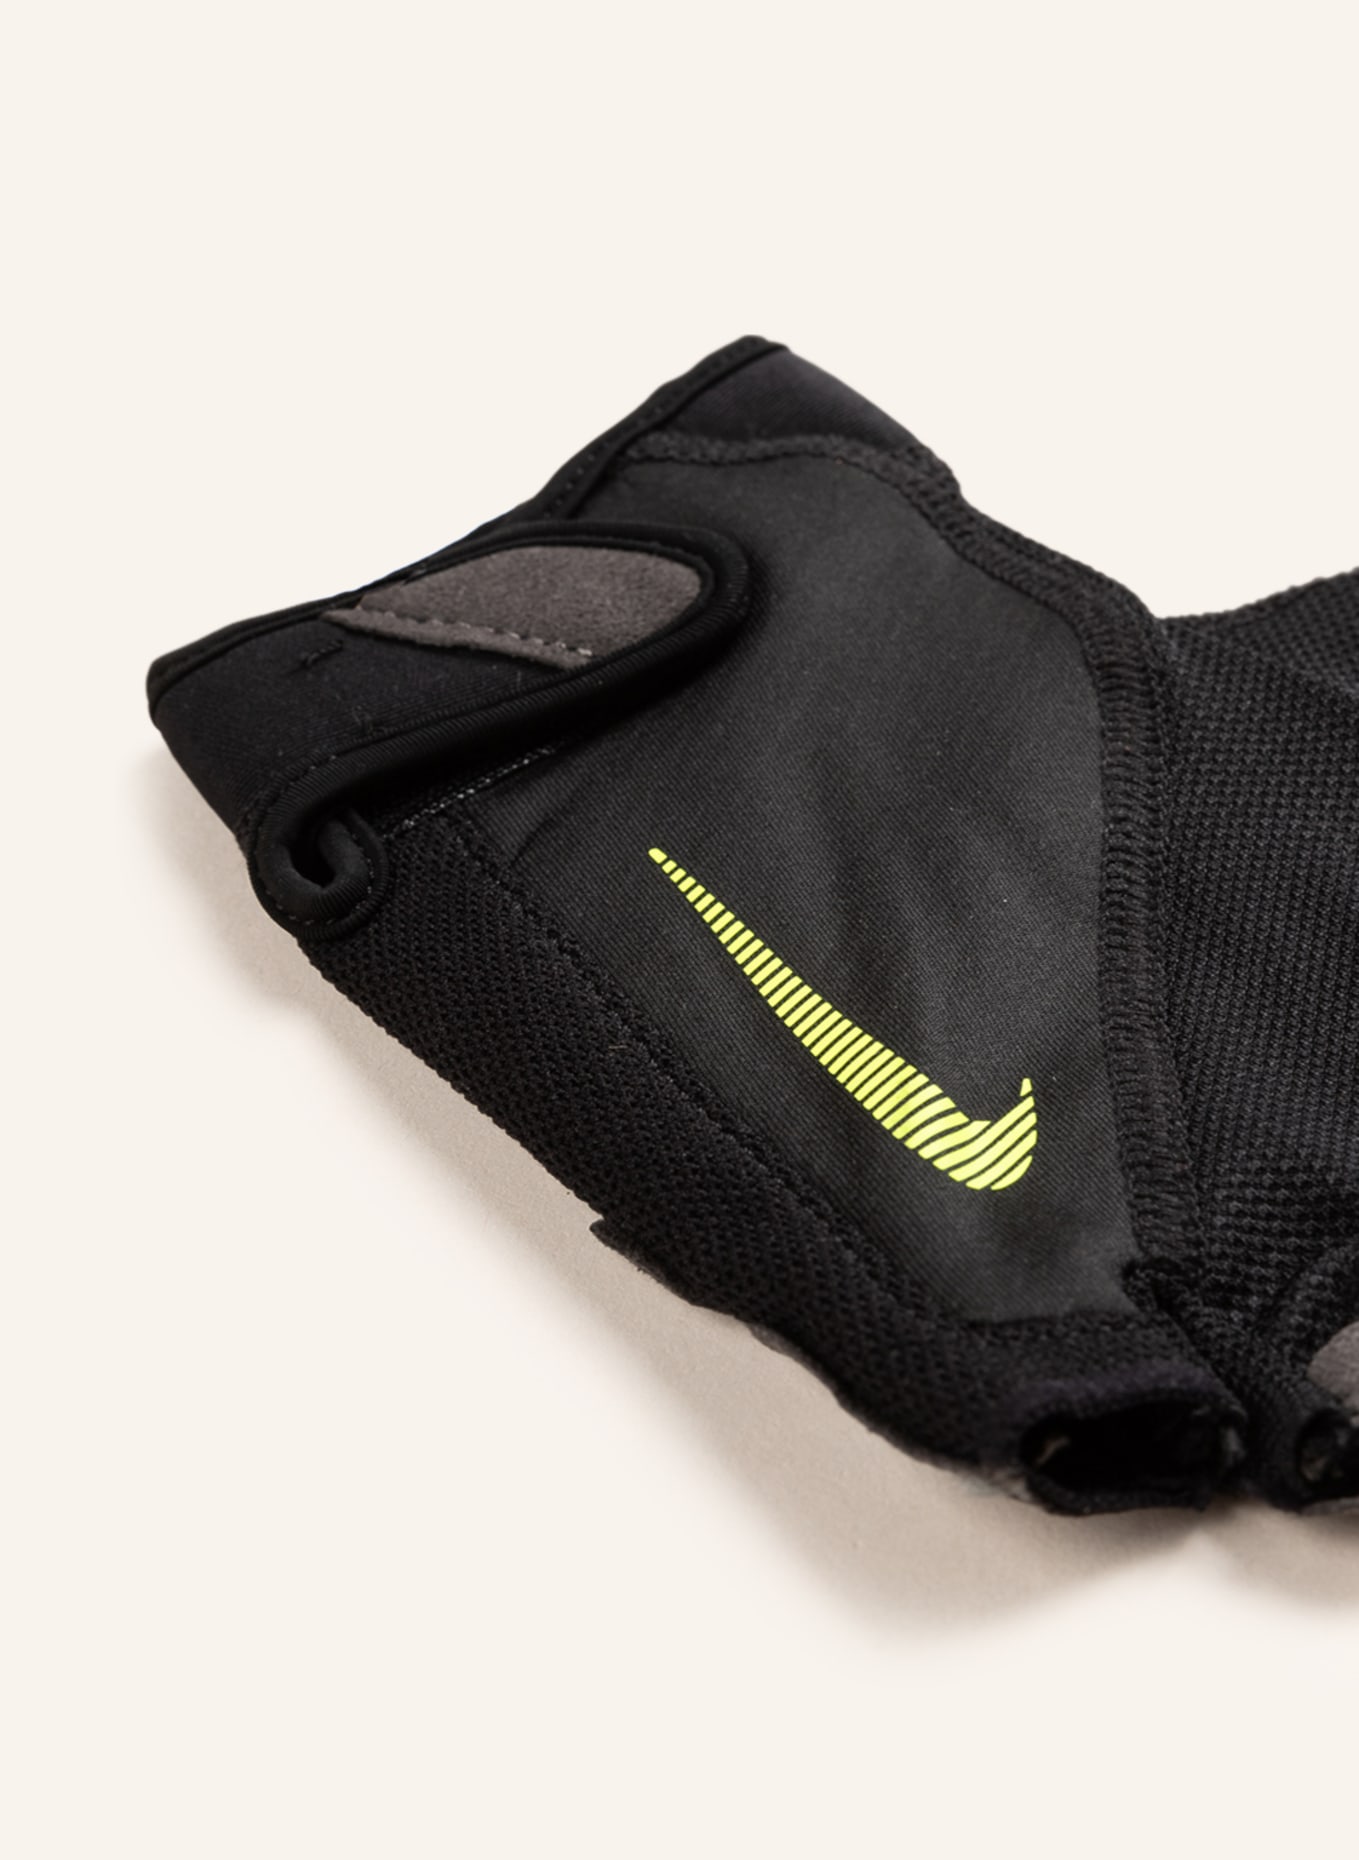 MIDWEIGHT dunkelgrau schwarz/ in Trainingshandschuhe Nike ELEMENTAL